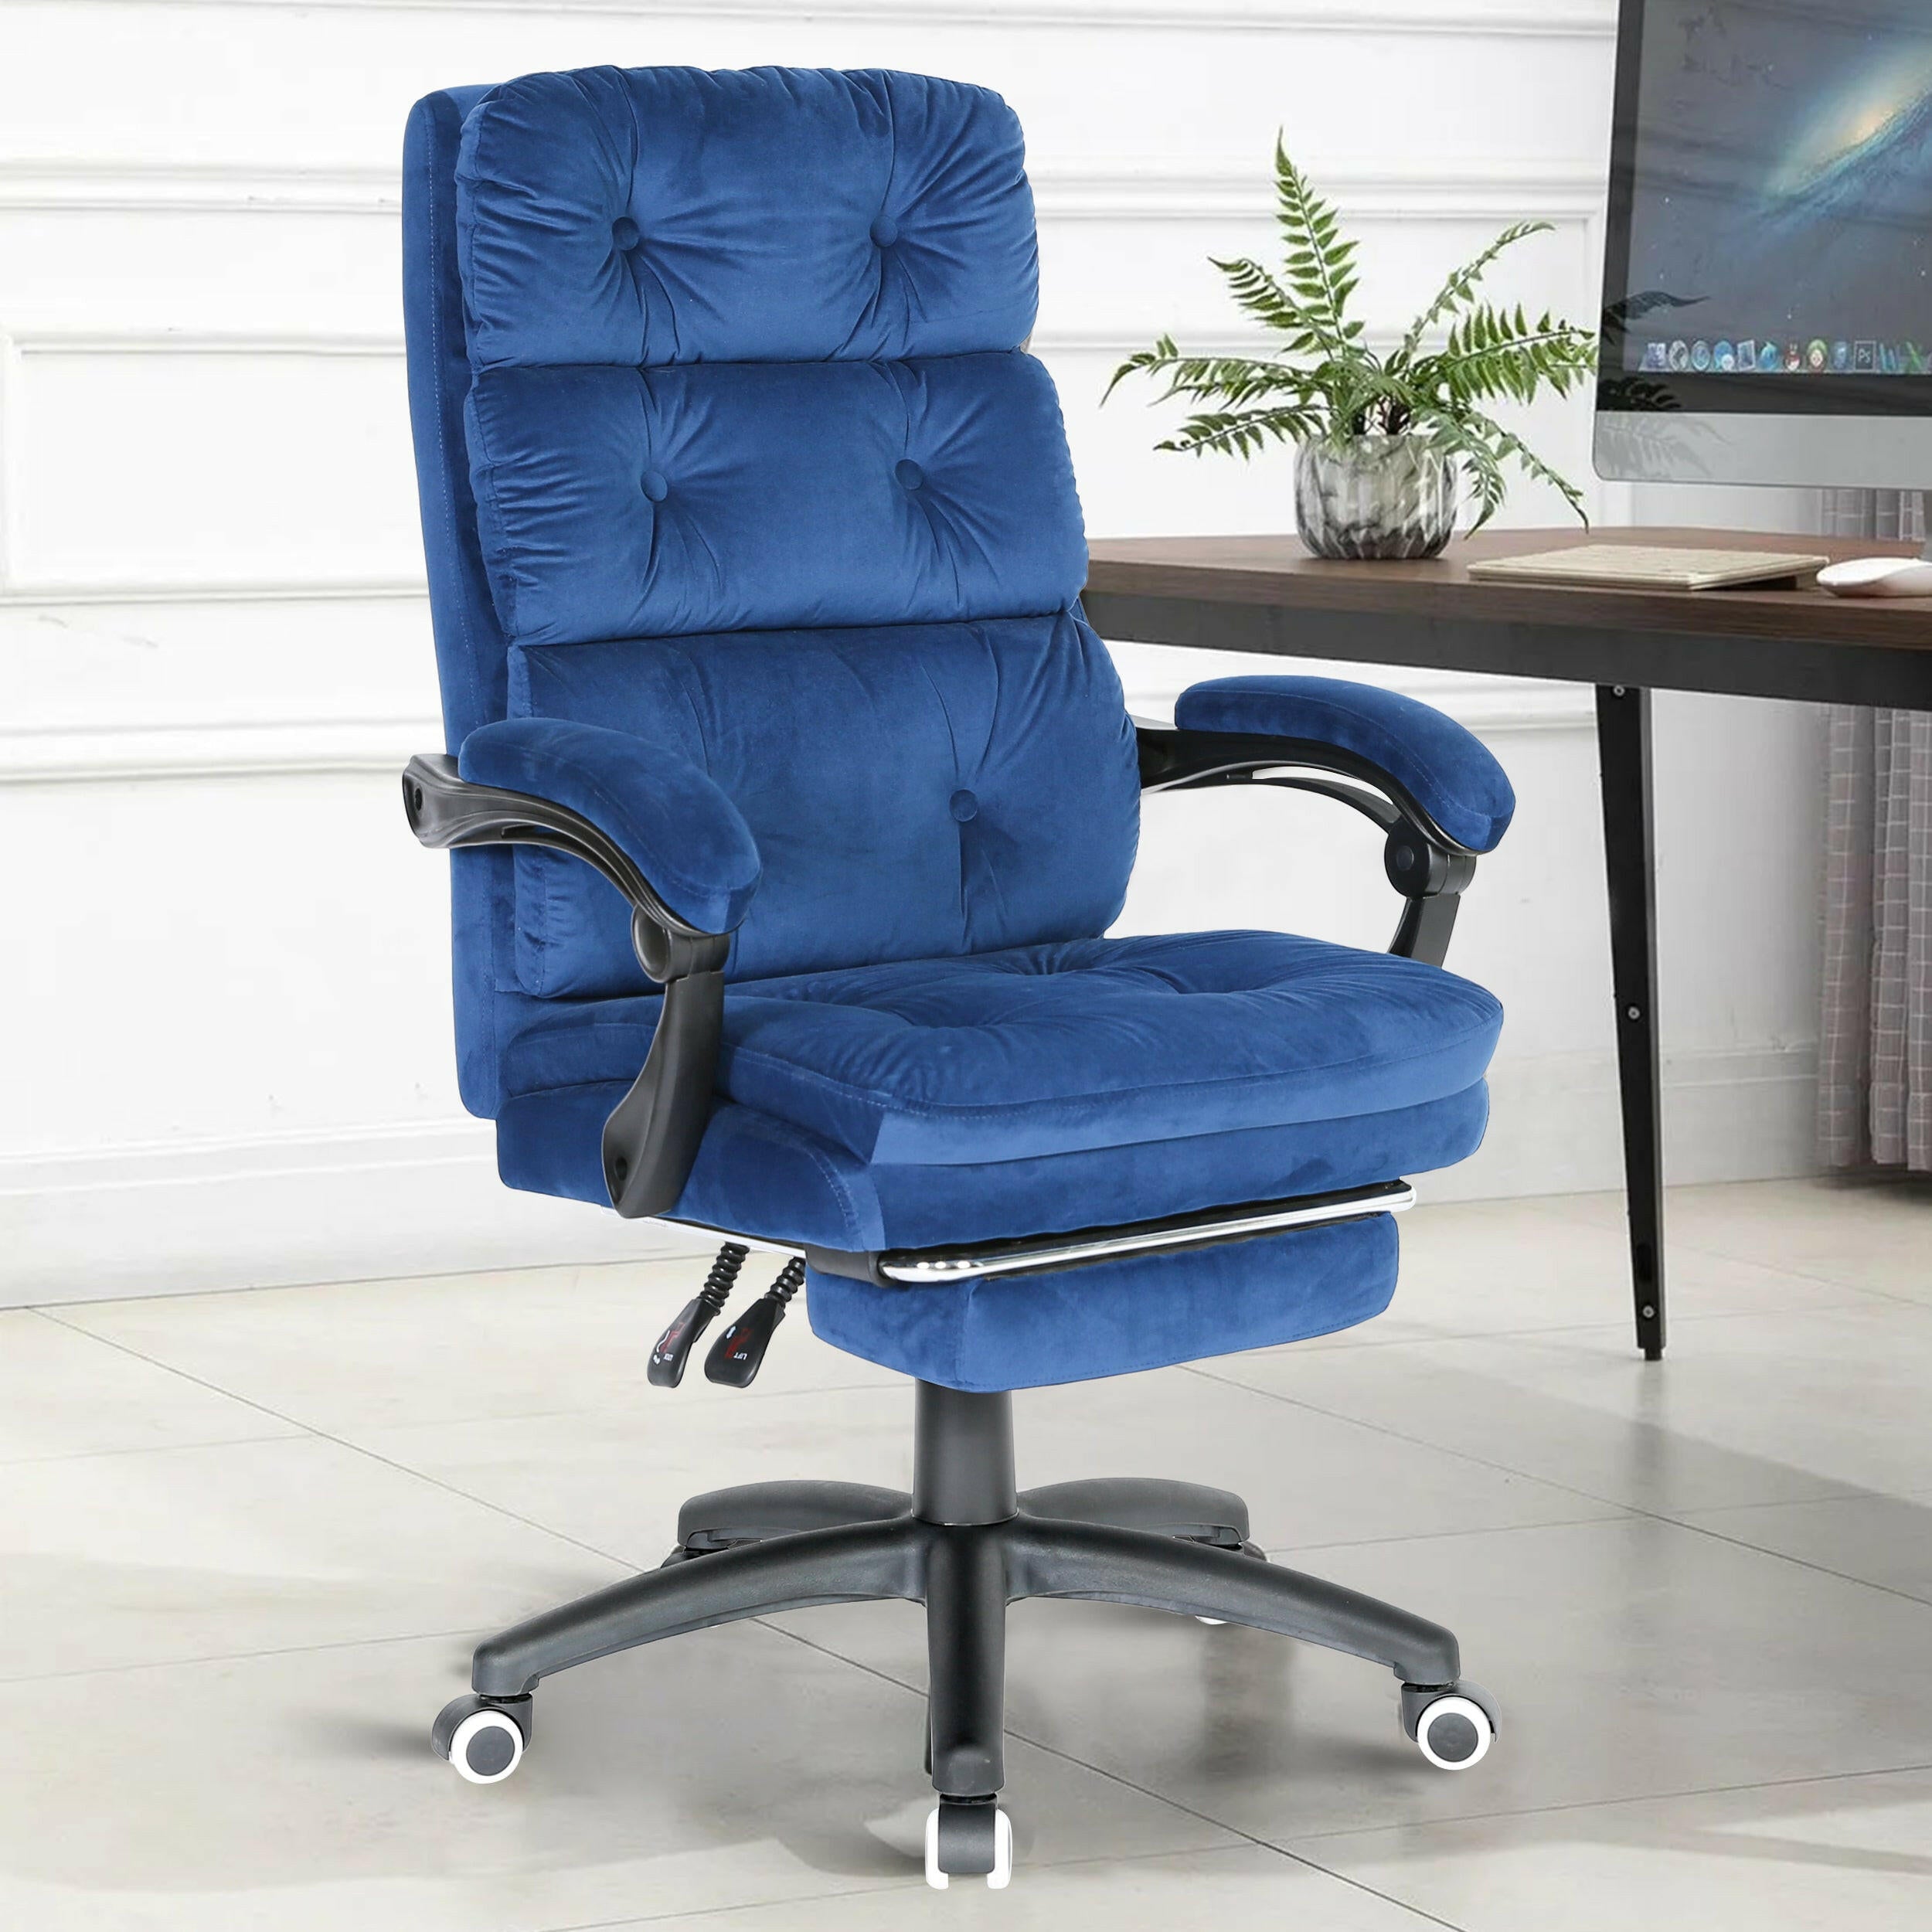 comfiest office chair